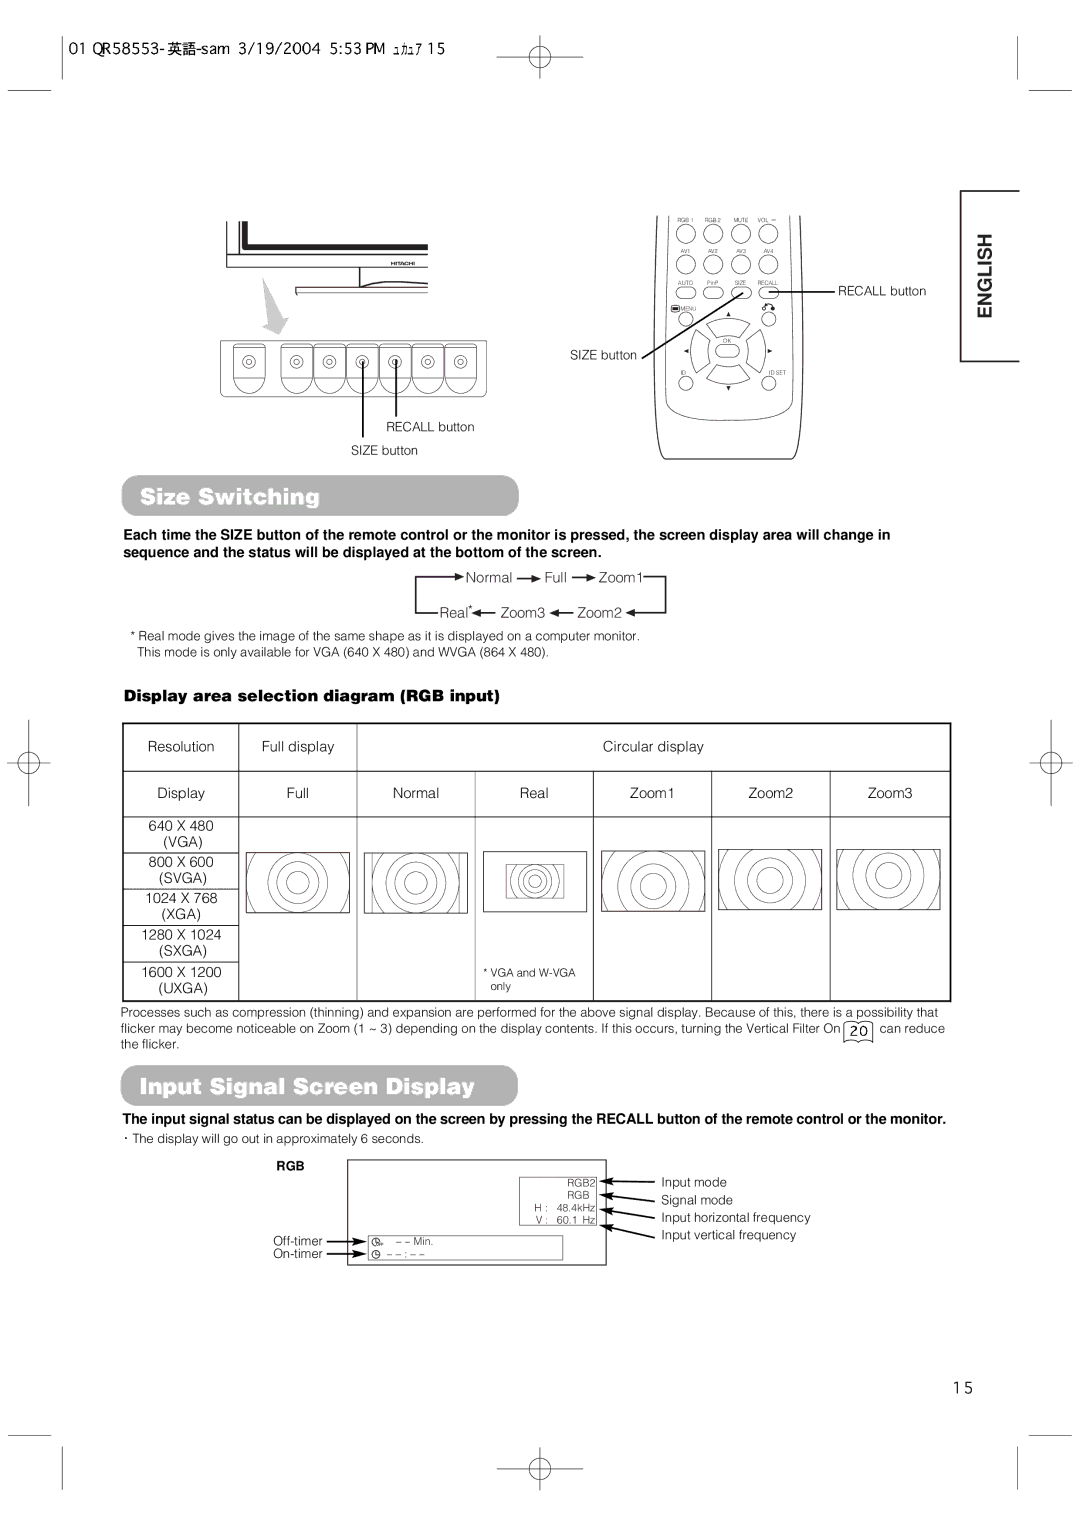 Hitachi 42PMA300A user manual Size Switching, Input Signal Screen Display, Display area selection diagram RGB input 